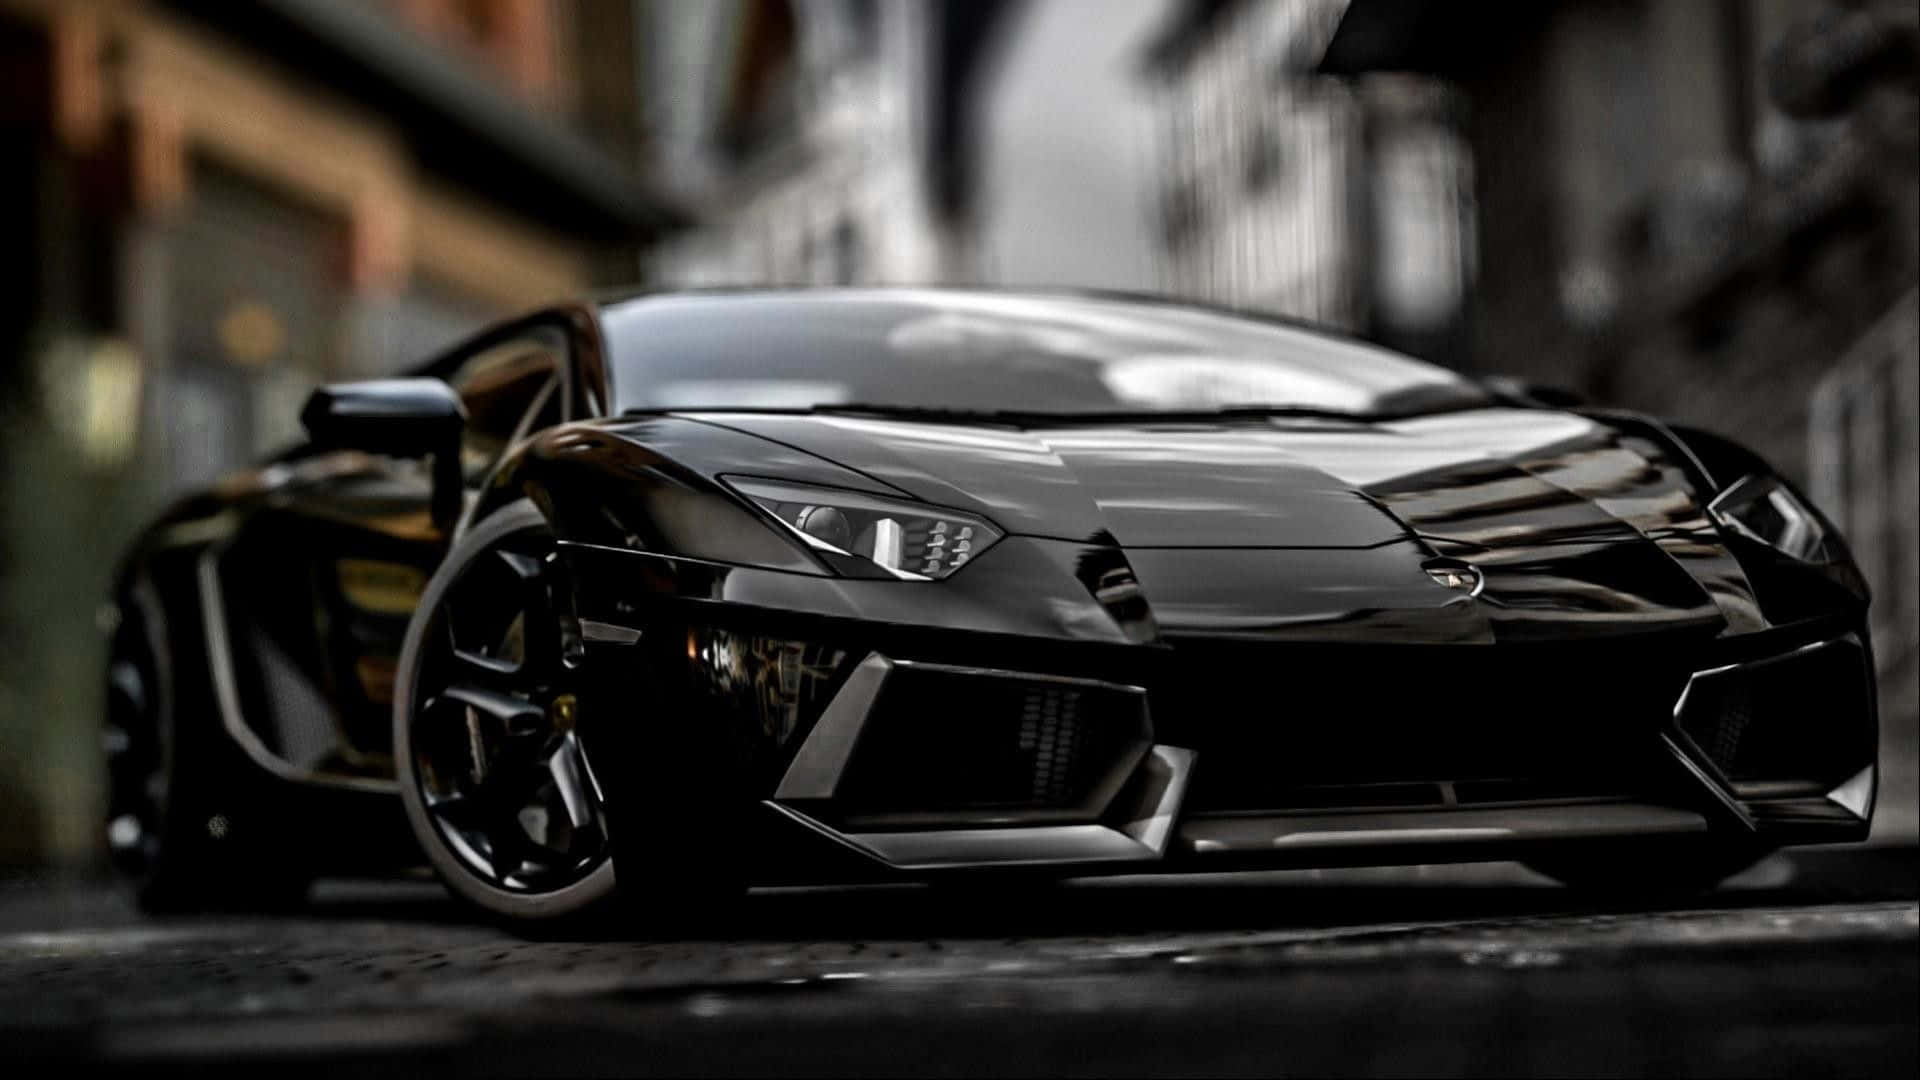 Stunning Lamborghini Aventador Best Car Background